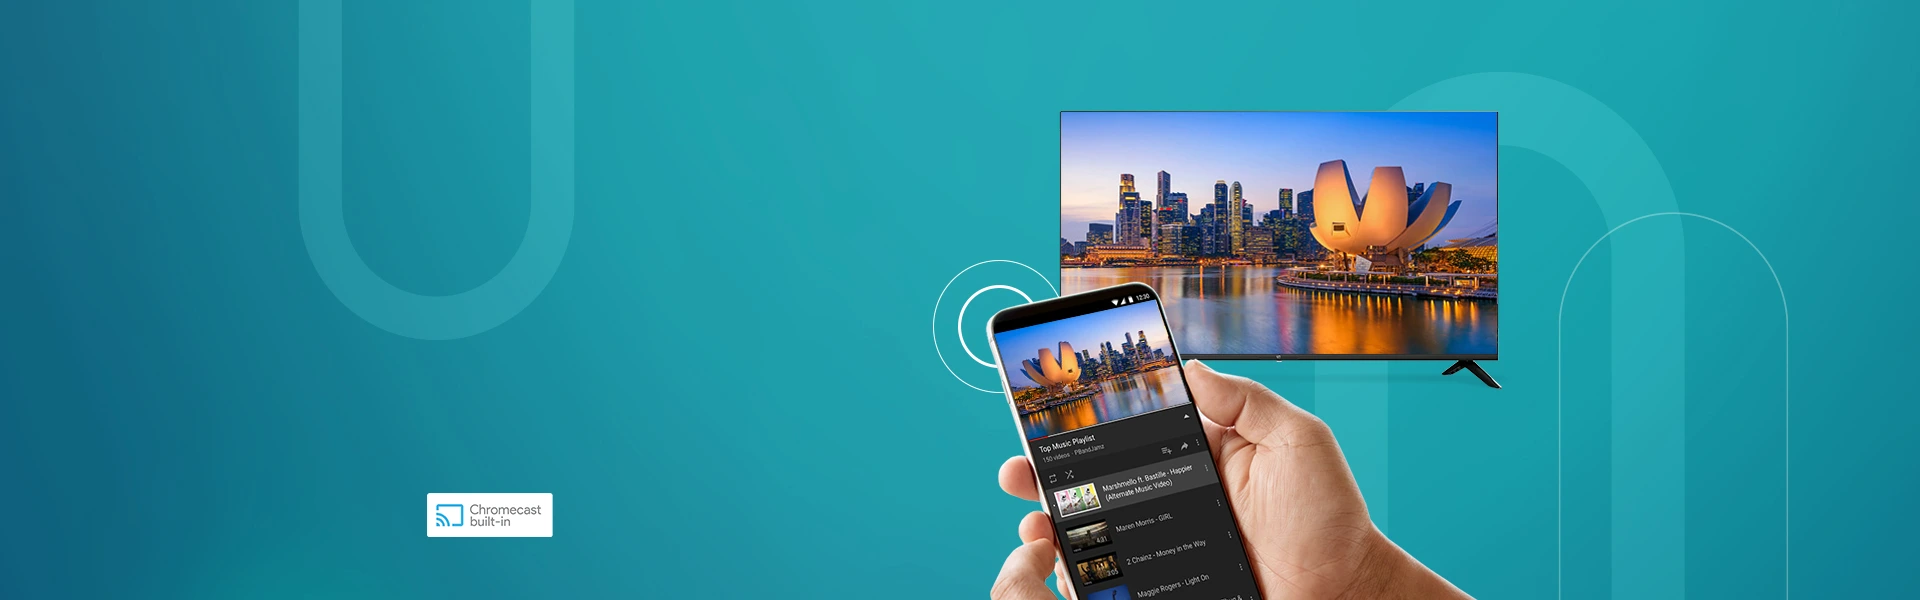 4K Ultra HD Android Smart TV UD 55U6210